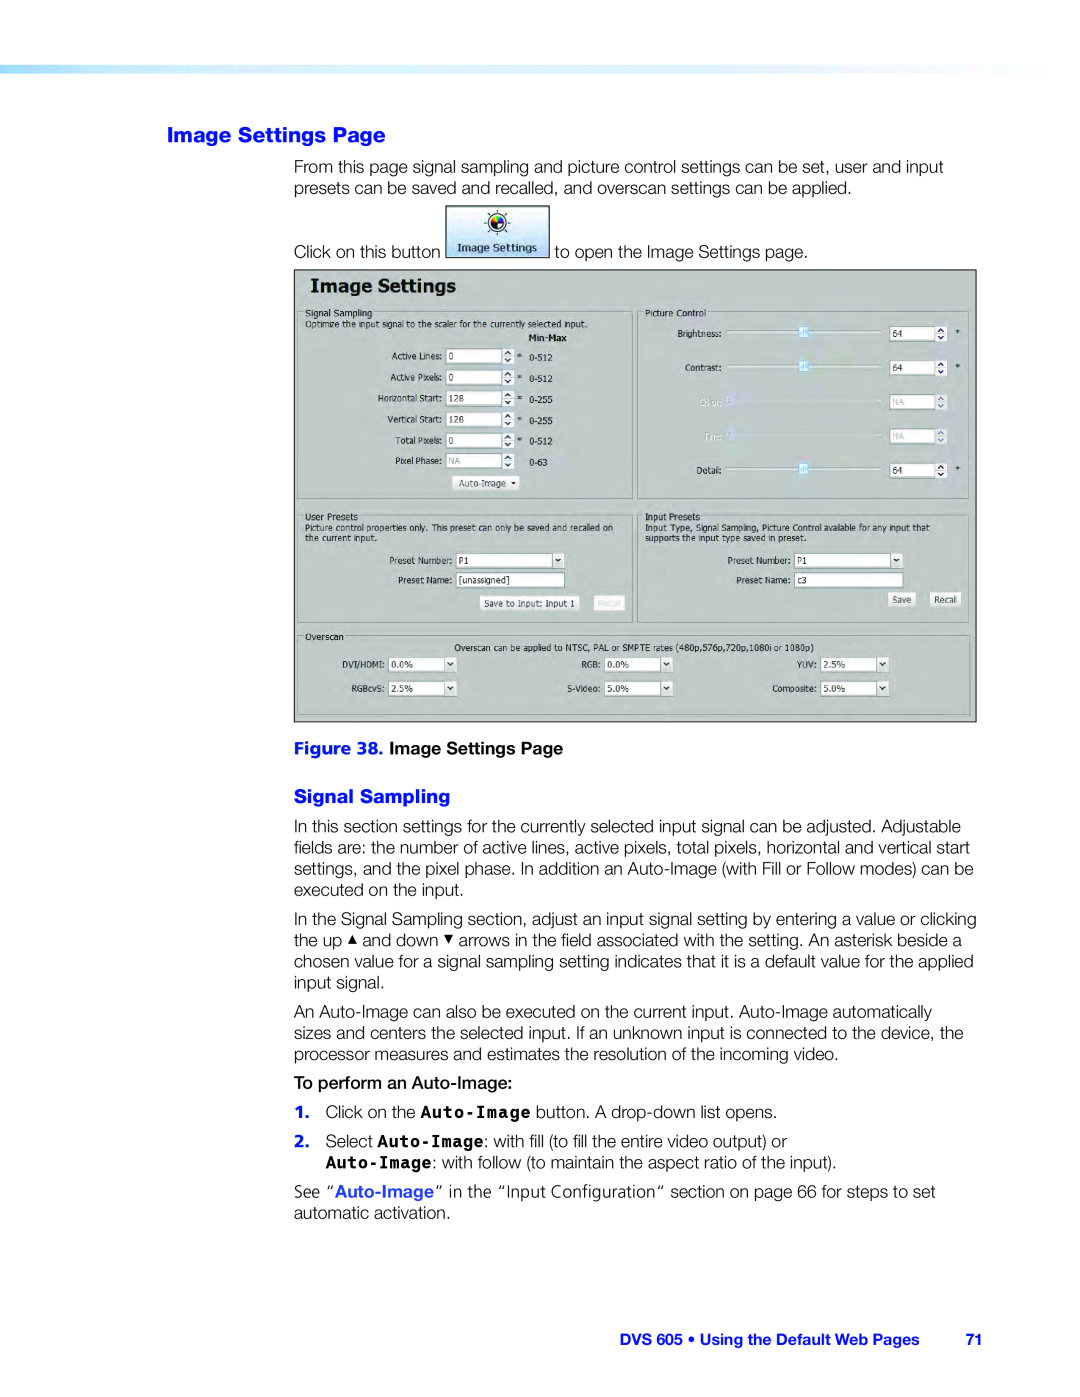 Extron electronic DVS 605 manual Image Settings Page, Signal Sampling 